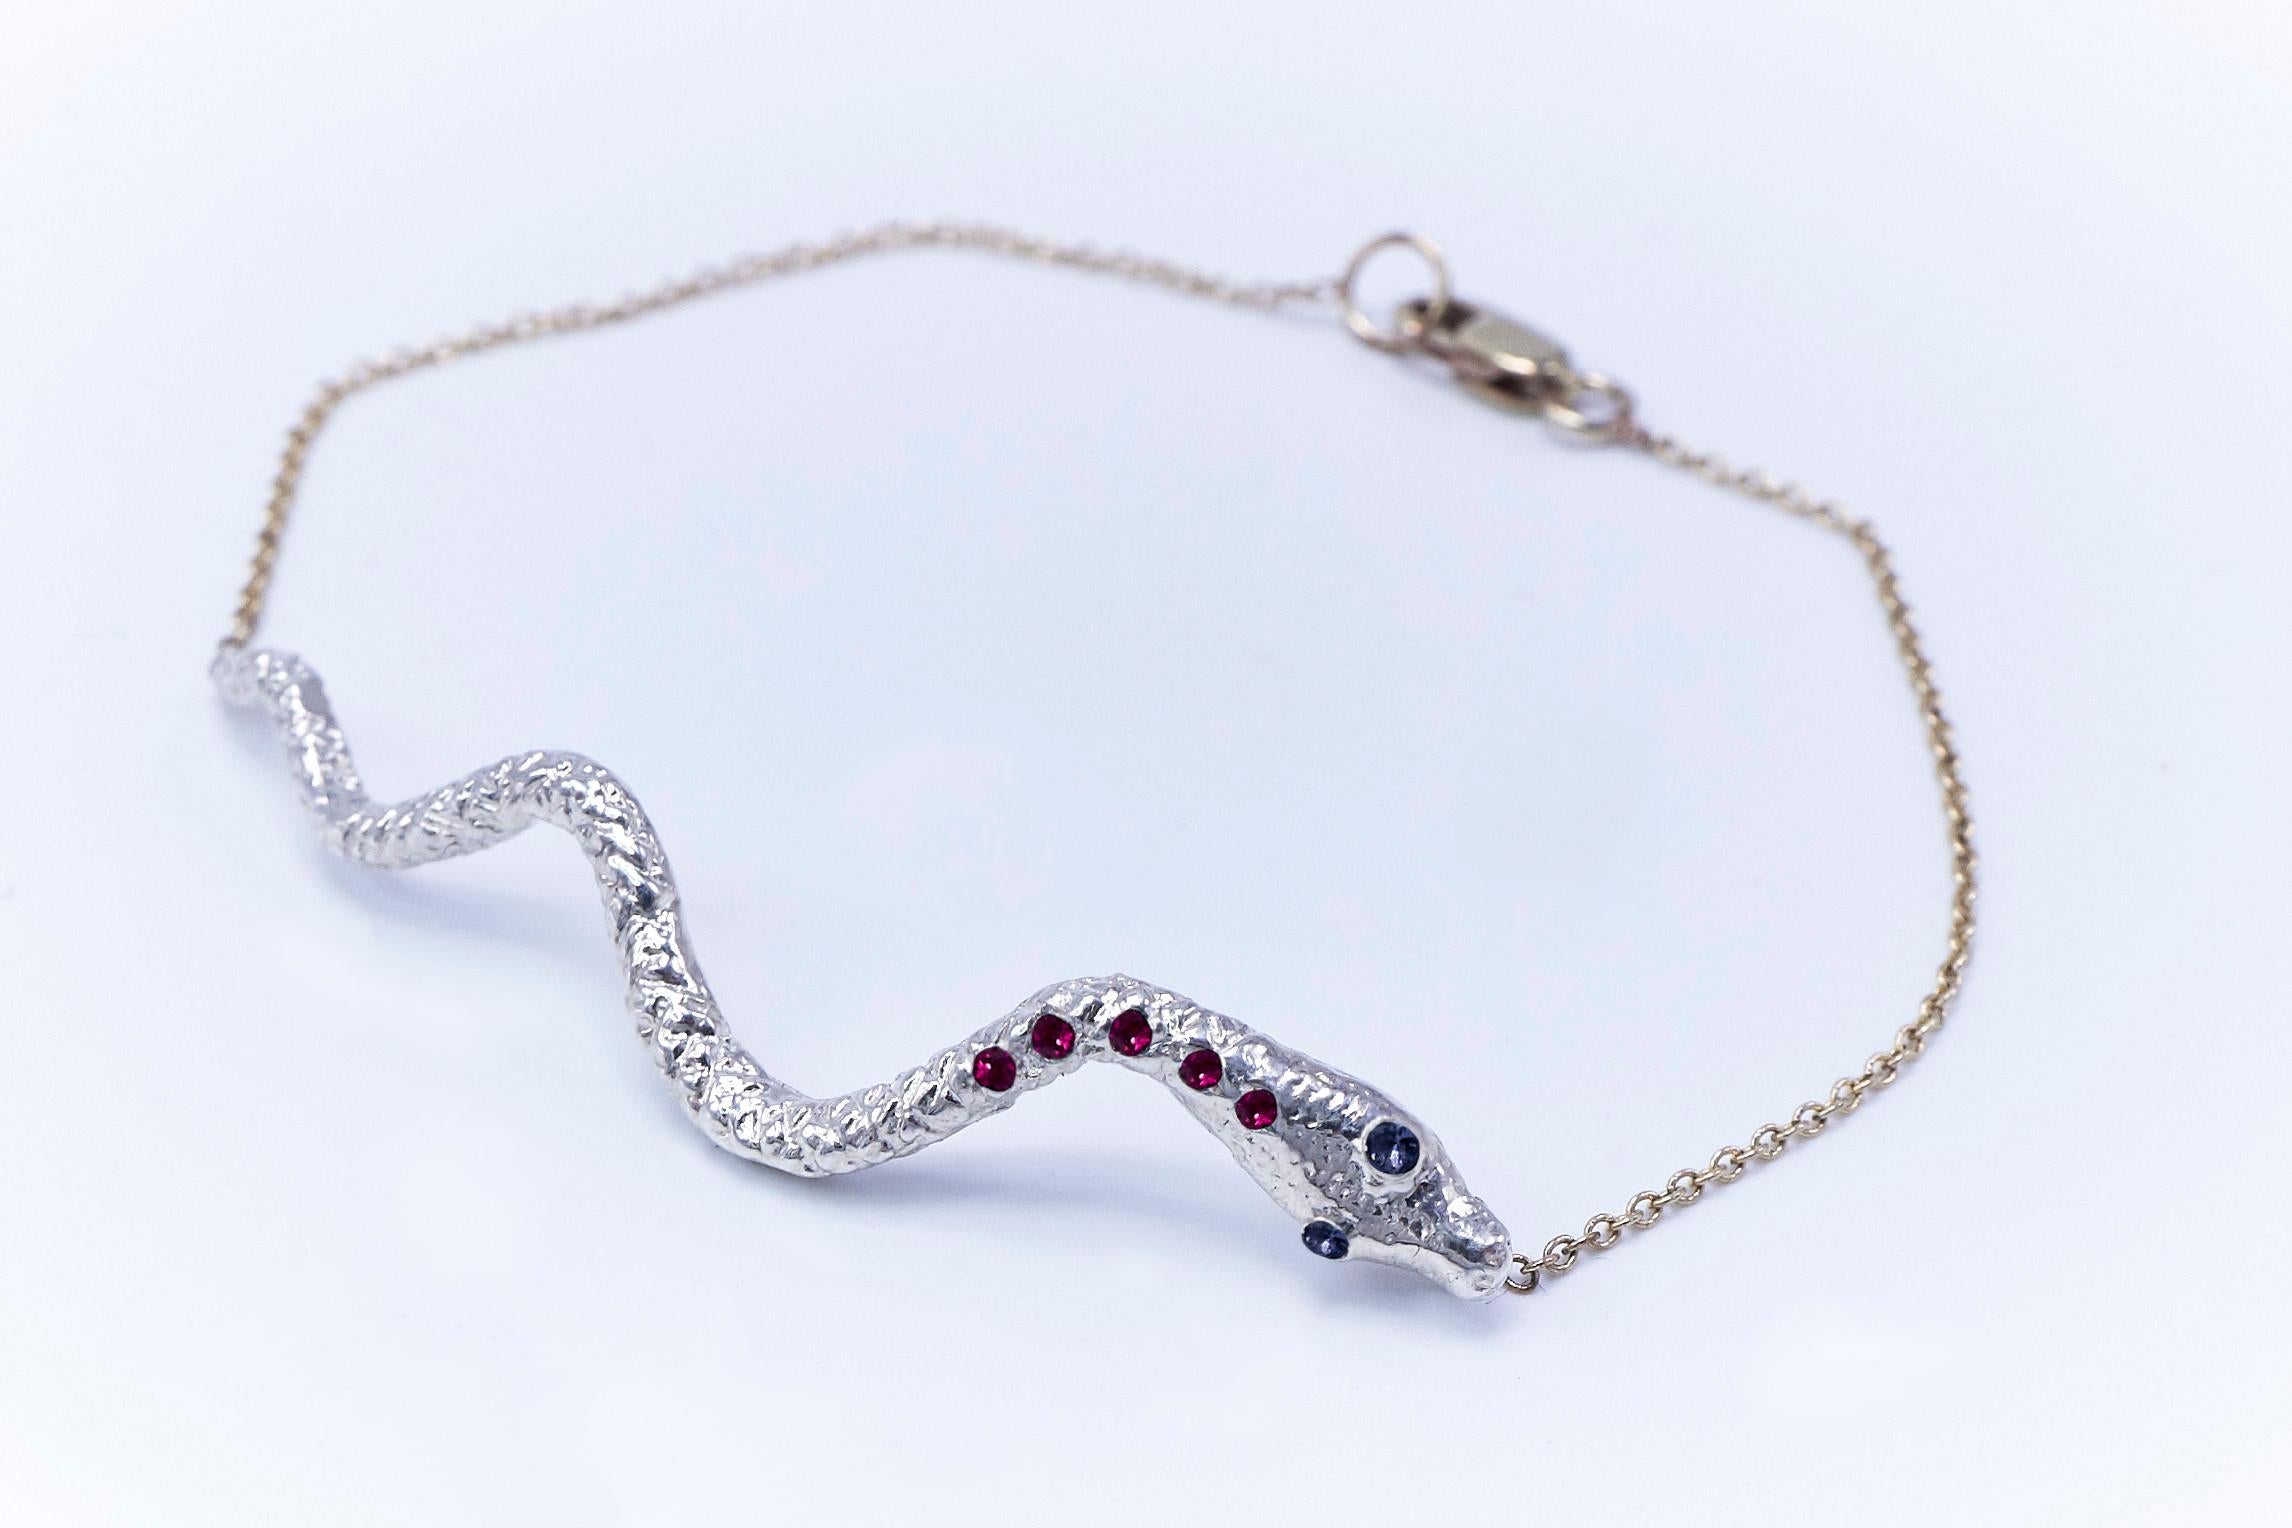  Ruby Tanzanite Snake Gold Silver Chain Bracelet  J Dauphin

J DAUPHIN Bracelet 